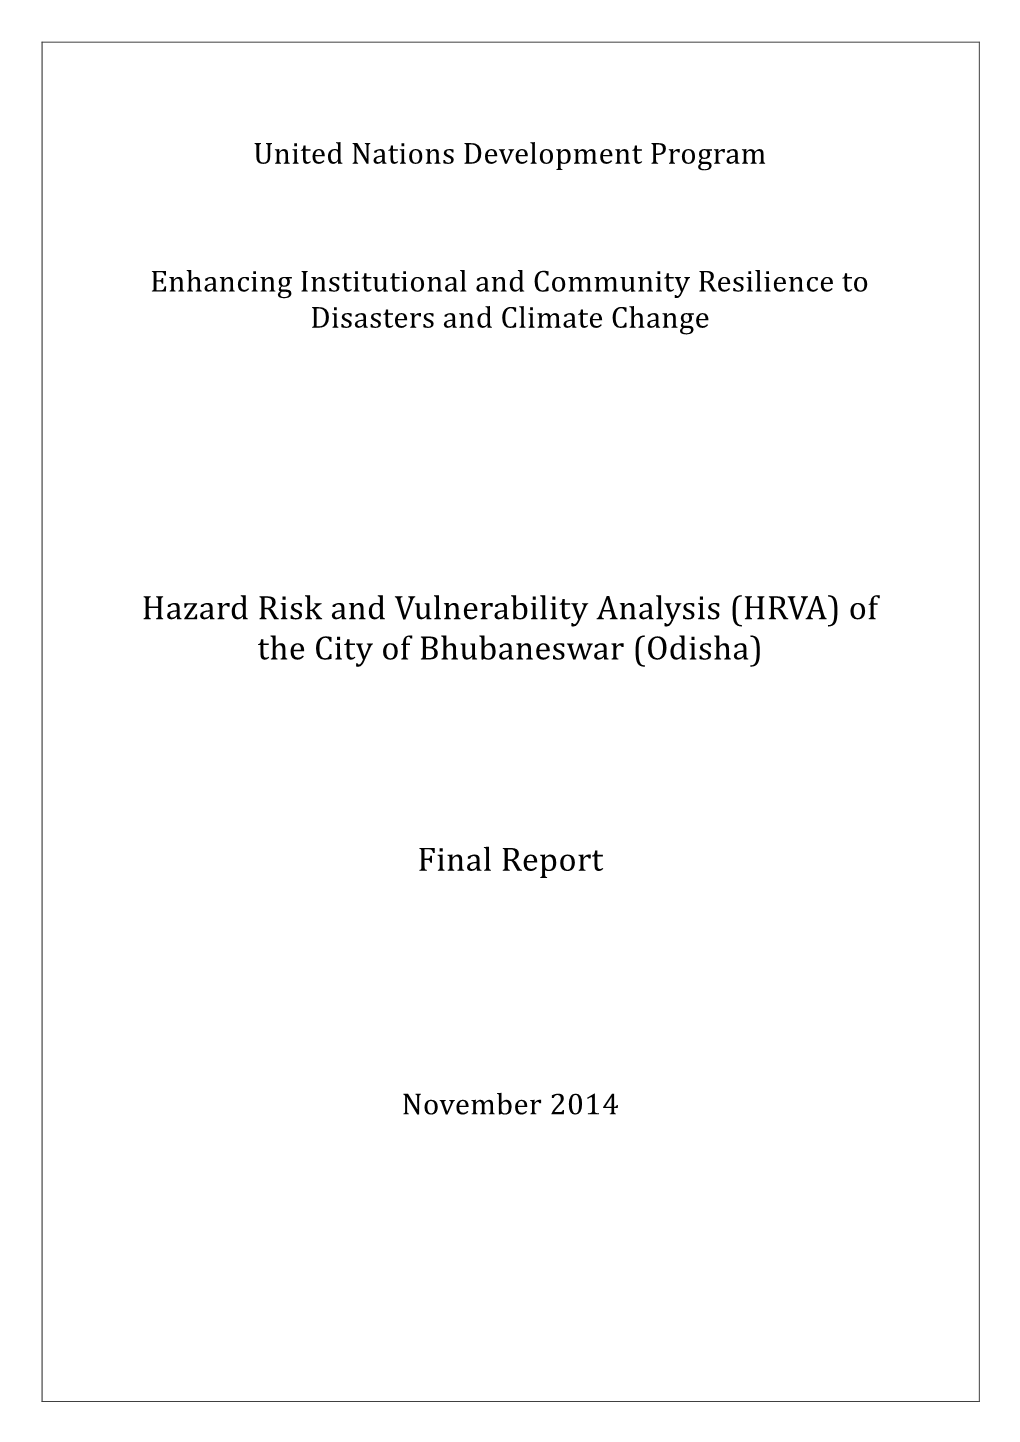 Hazard Risk and Vulnerability Analysis (HRVA) of the City of Bhubaneswar (Odisha)